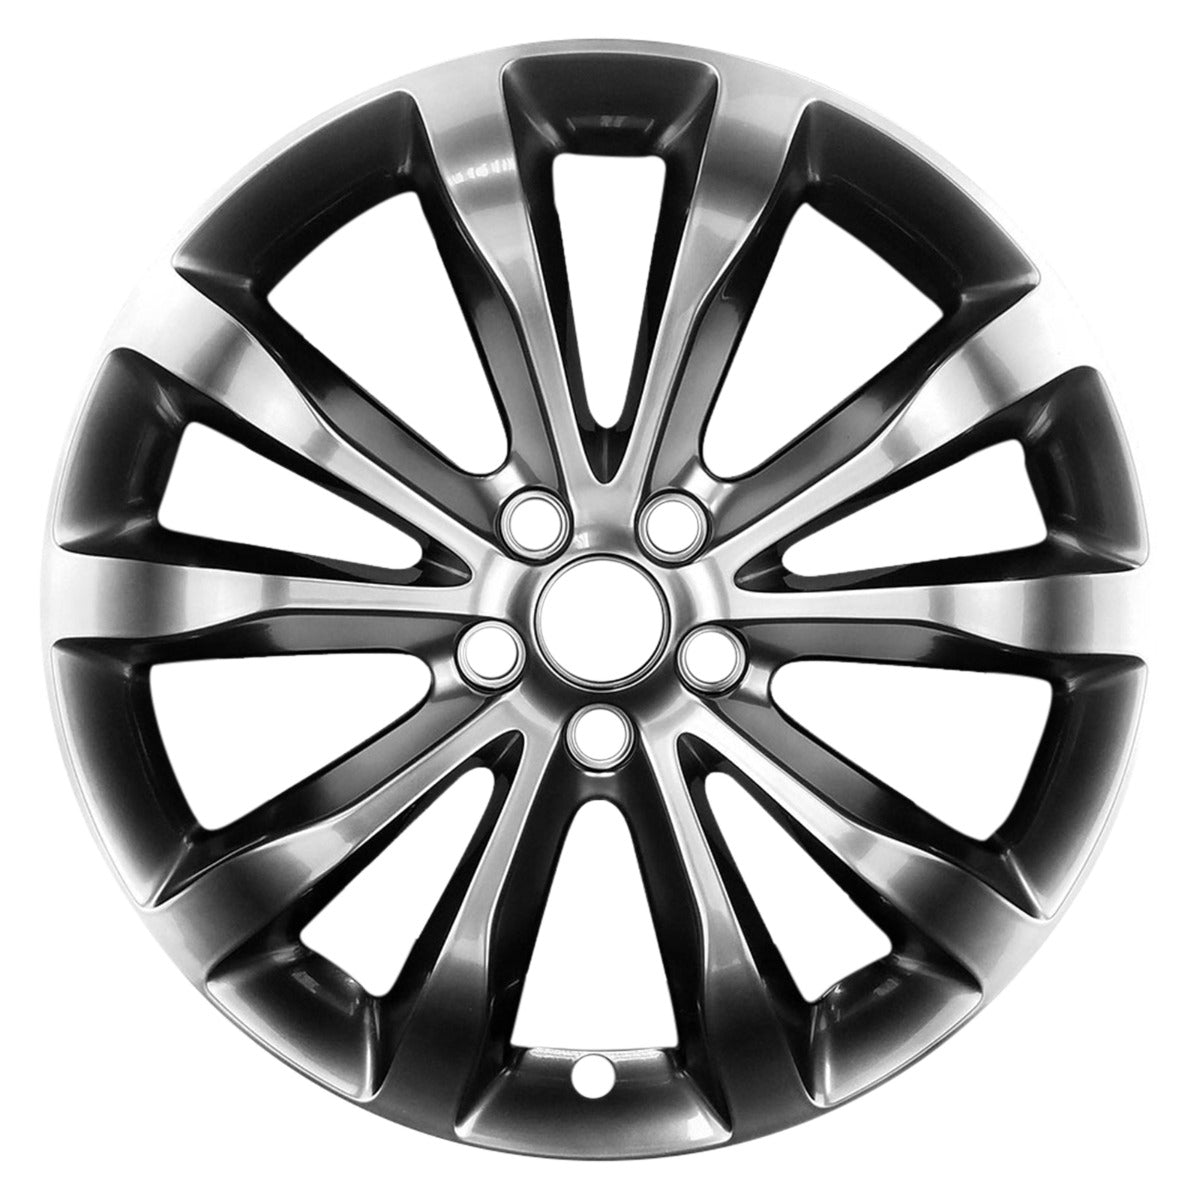 2018 Chrysler 300 19" OEM Wheel Rim W2530H